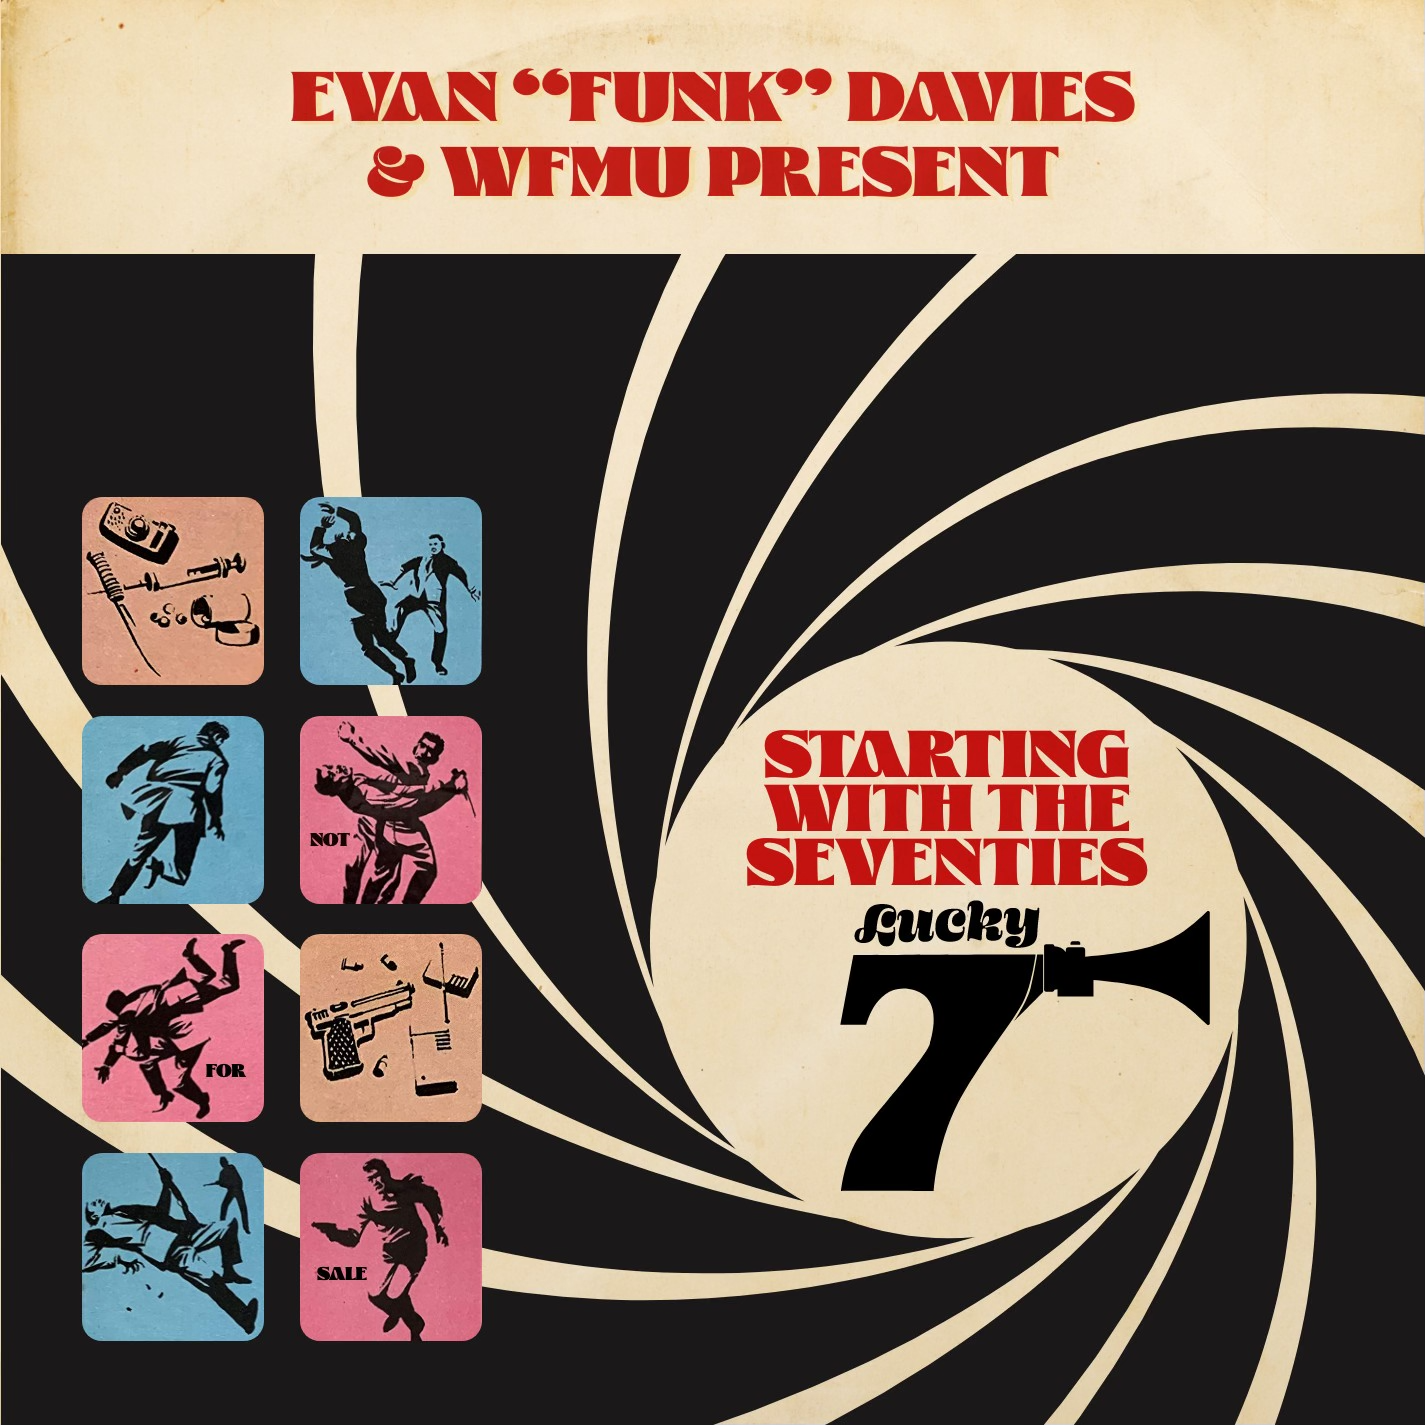 The Evan Funk Davies Show on WFMU